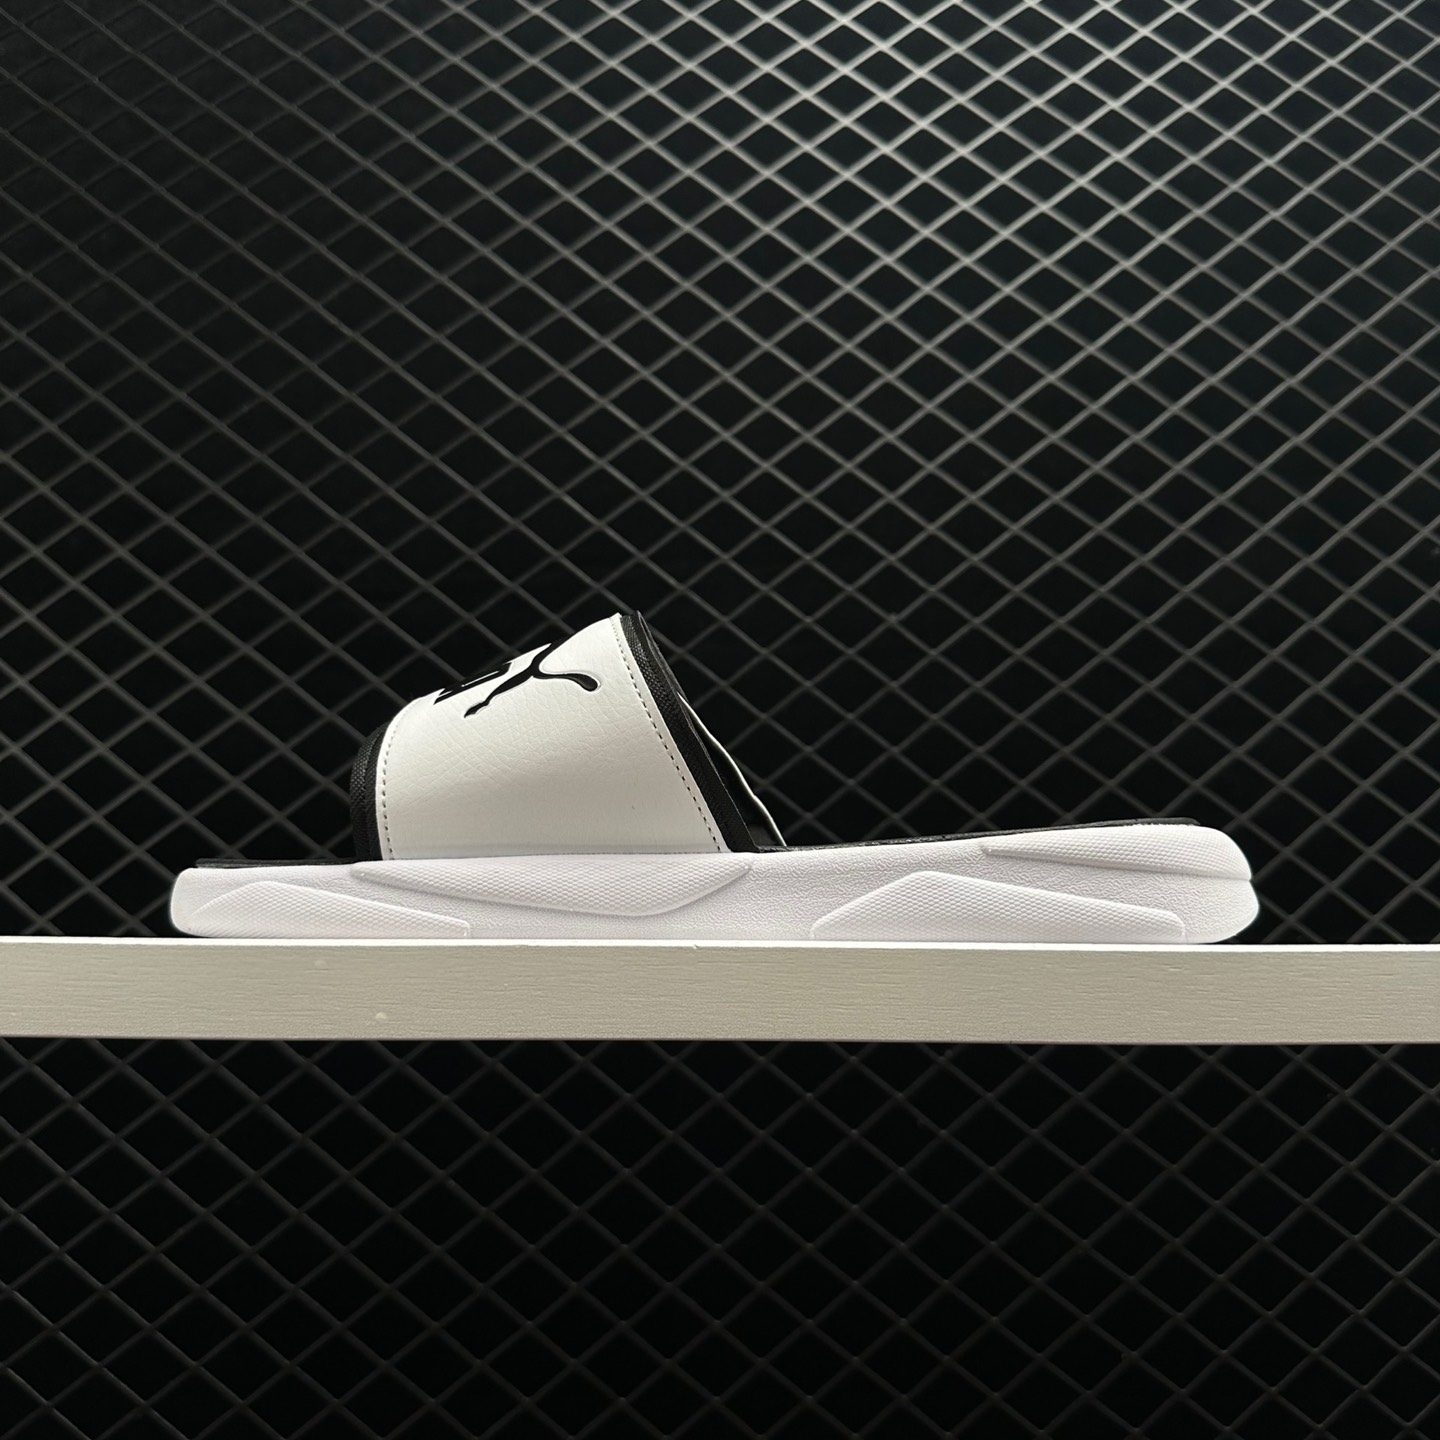 PUMA Royalcat Comfort Sandal 'White' 372280-02 - Stylish and Comfortable Footwear